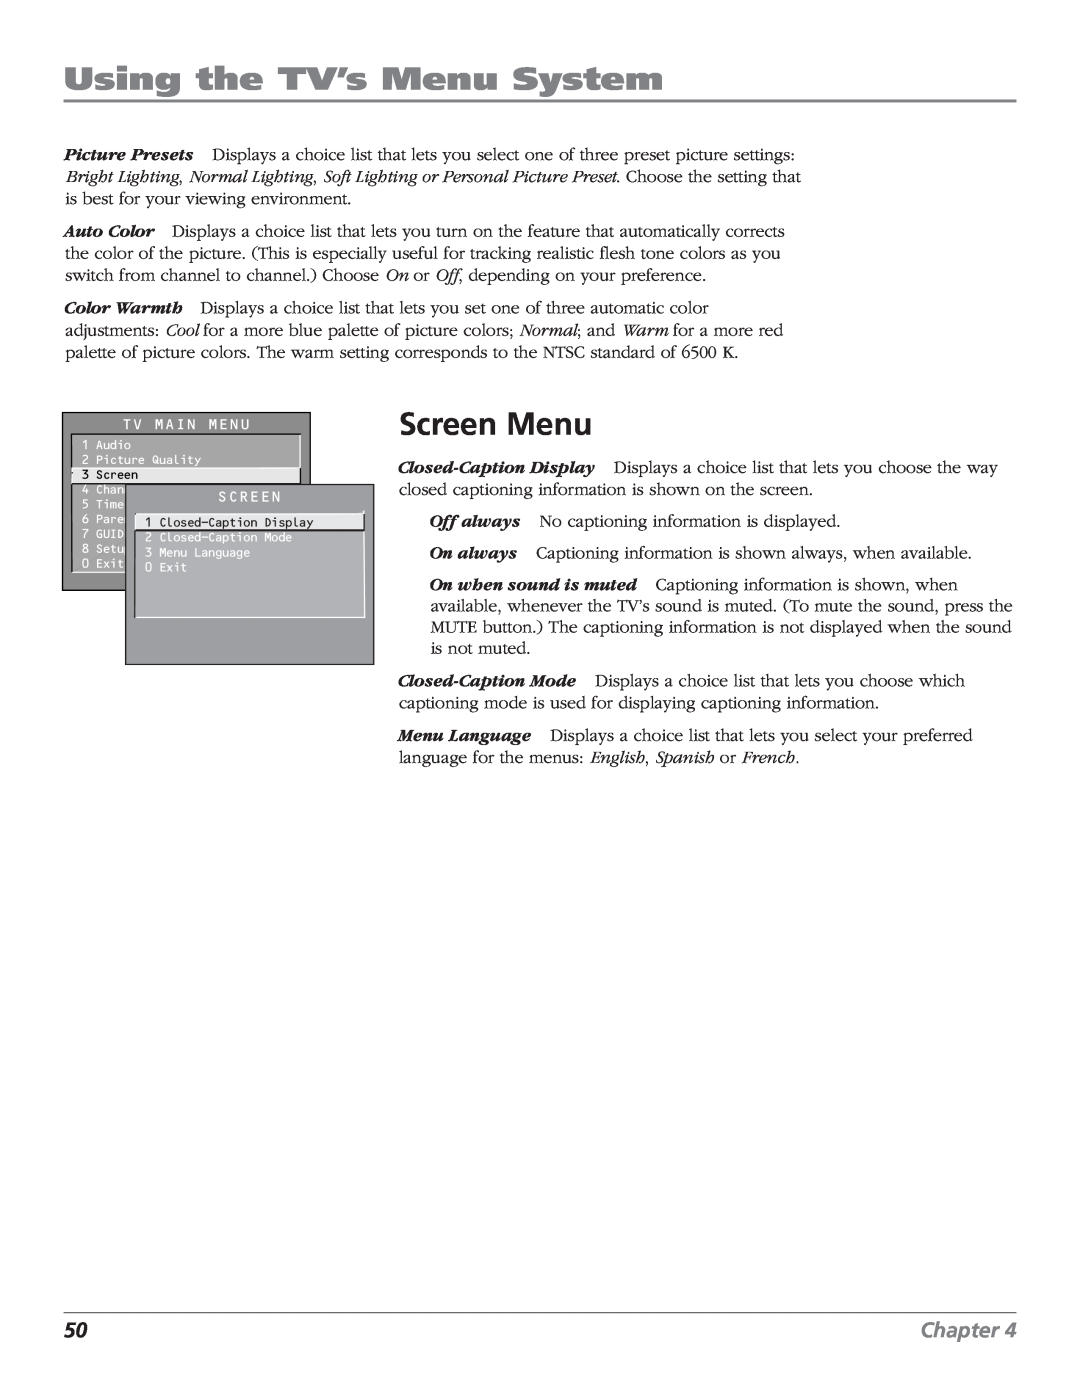 RCA MR68TF700 manual Screen Menu, Using the TV’s Menu System, Chapter 